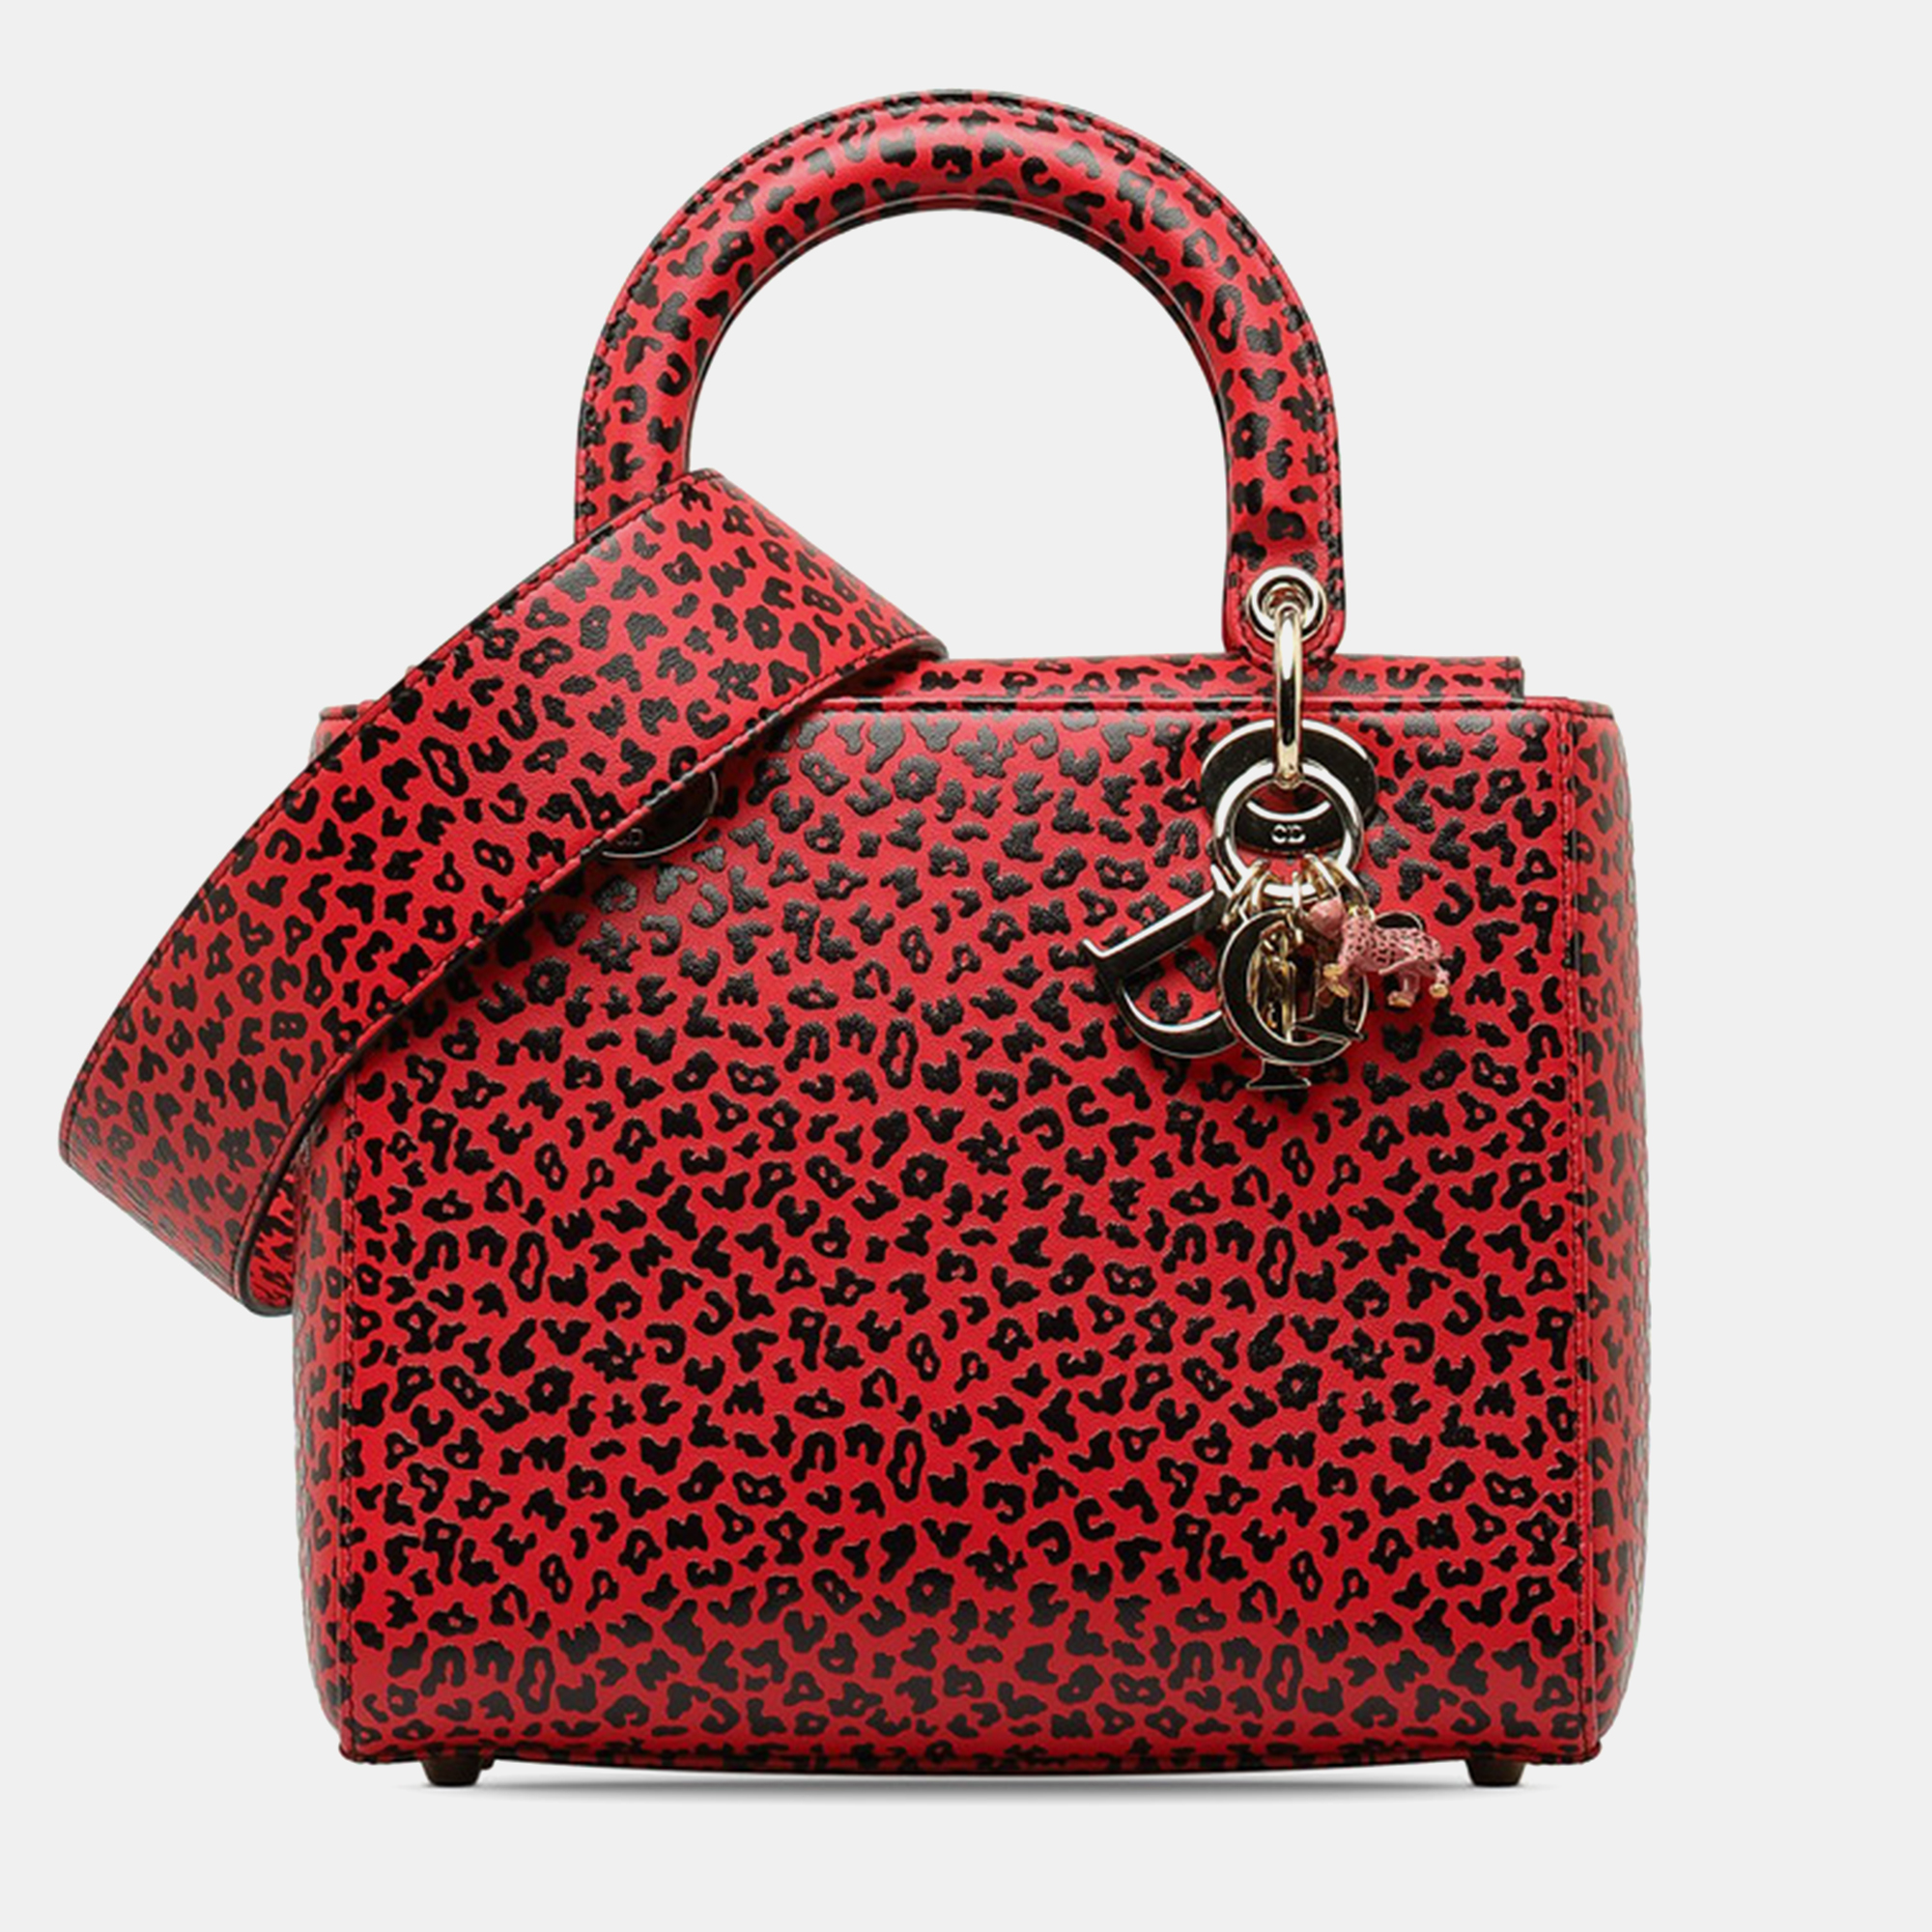 Dior red/black leather medium lady dior top handle bag